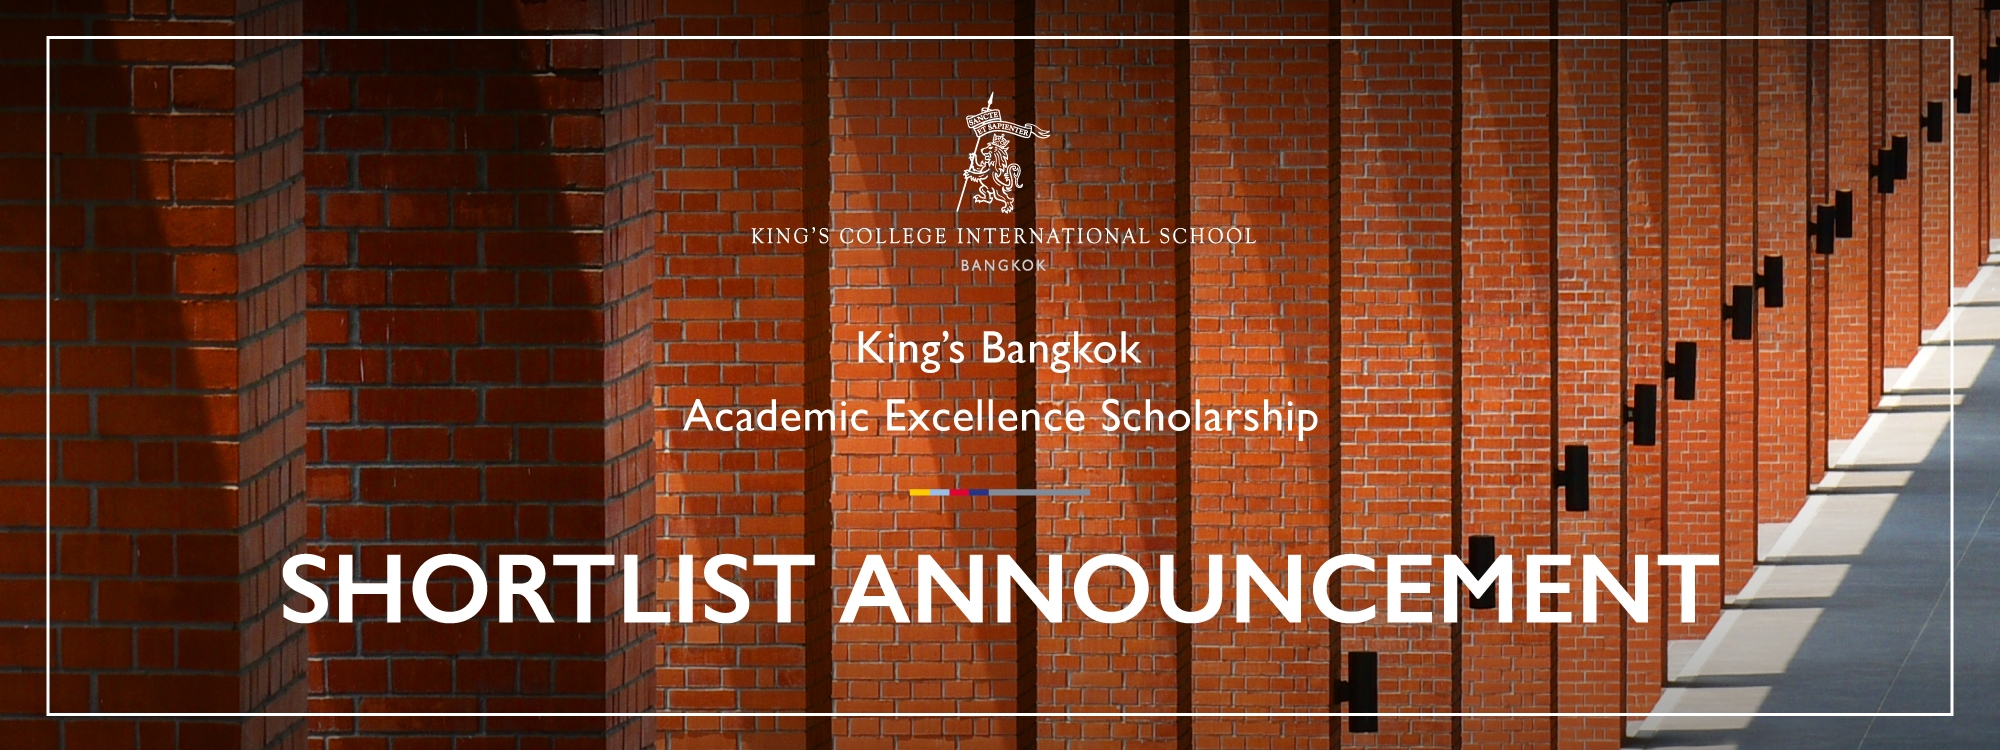 Shortlist for the King’s Bangkok Academic Excellence Scholarship 2023